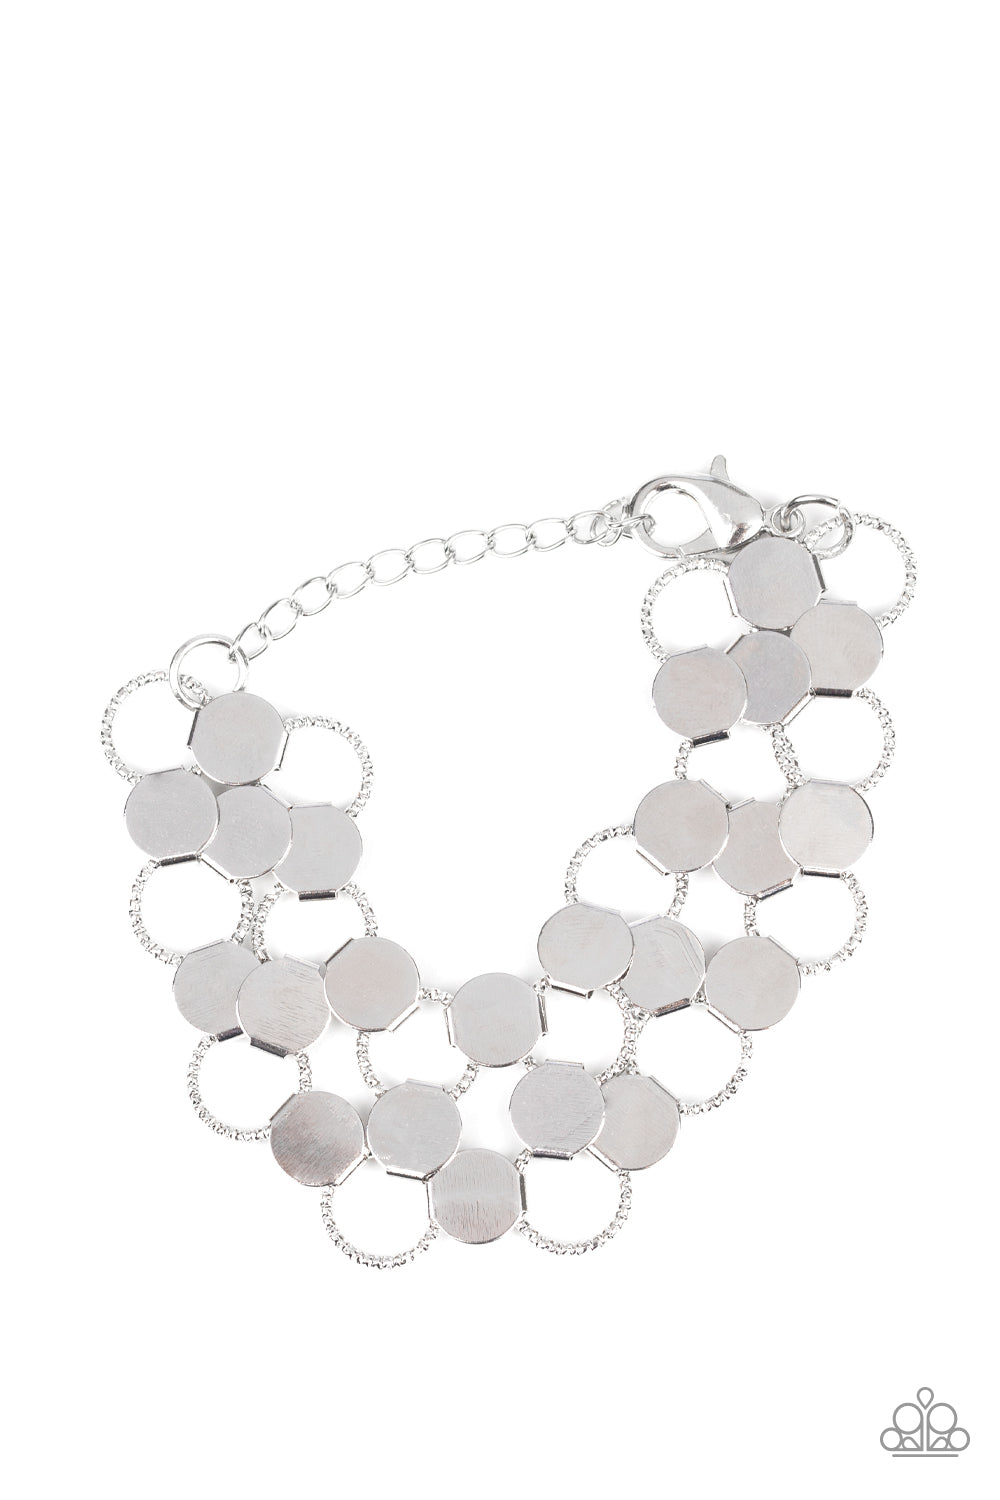 Net Result - Silver necklace w/ matching bracelet